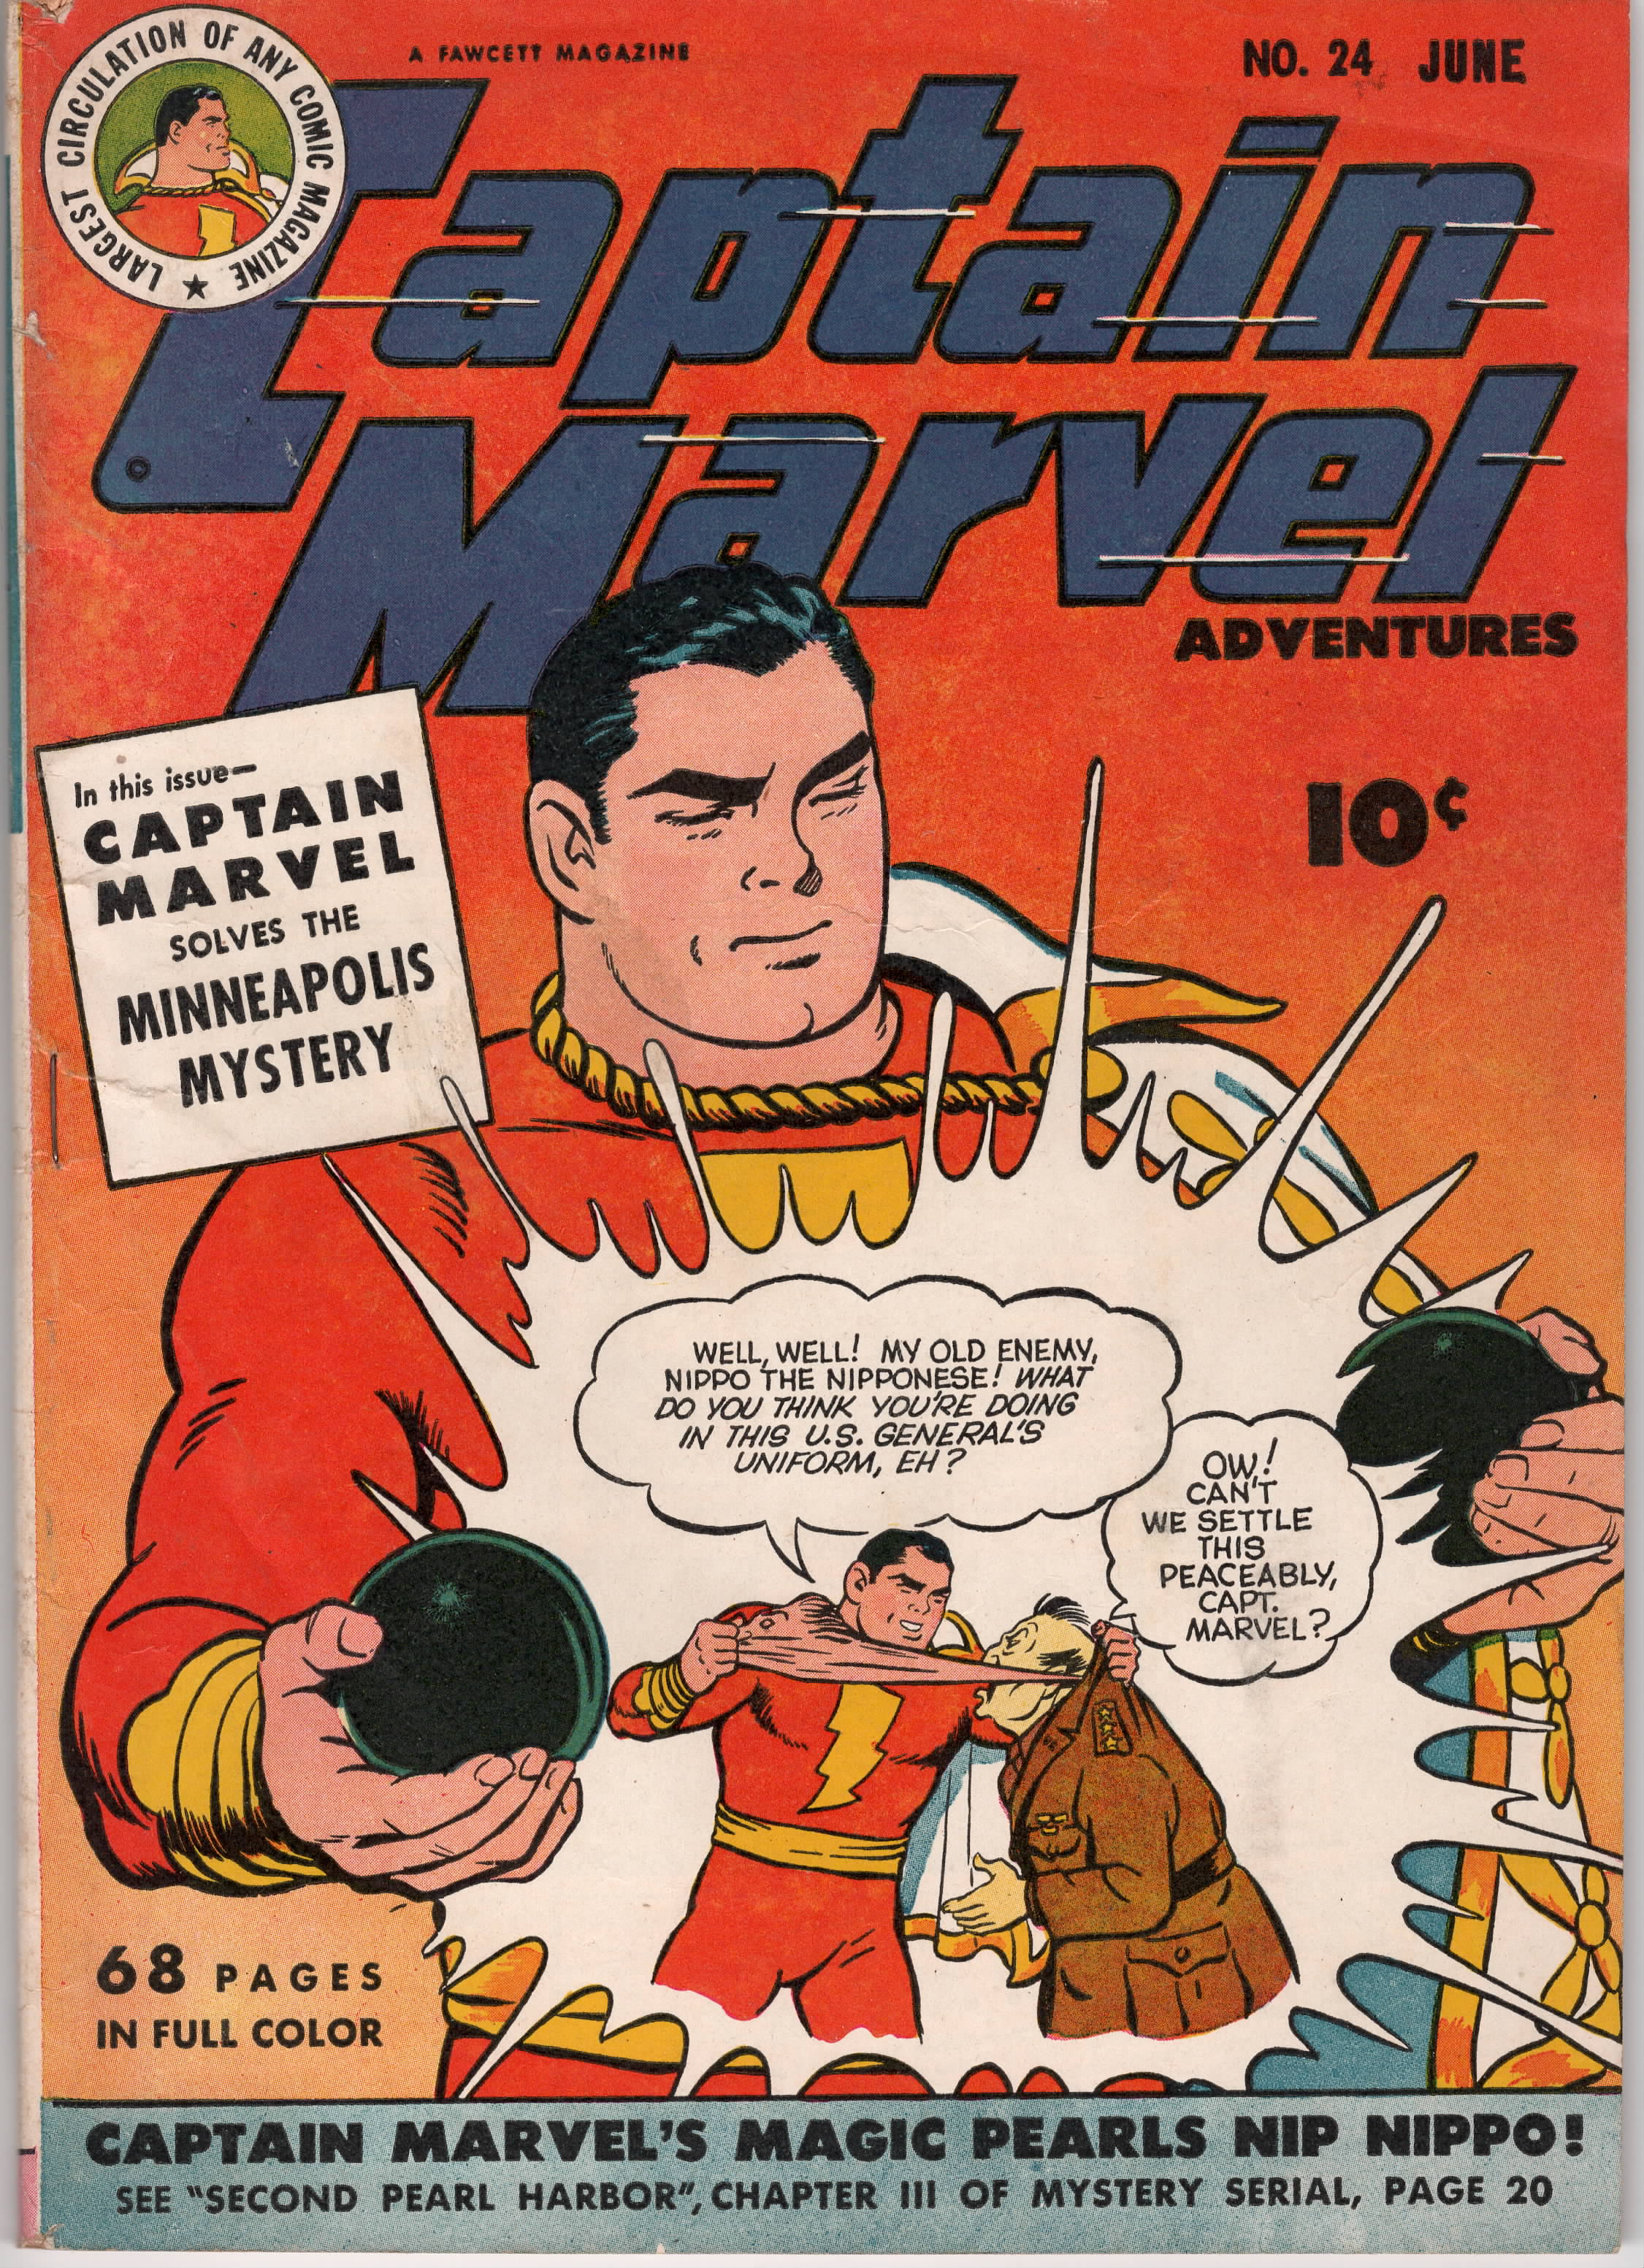 Captain Marvel Adventures #024